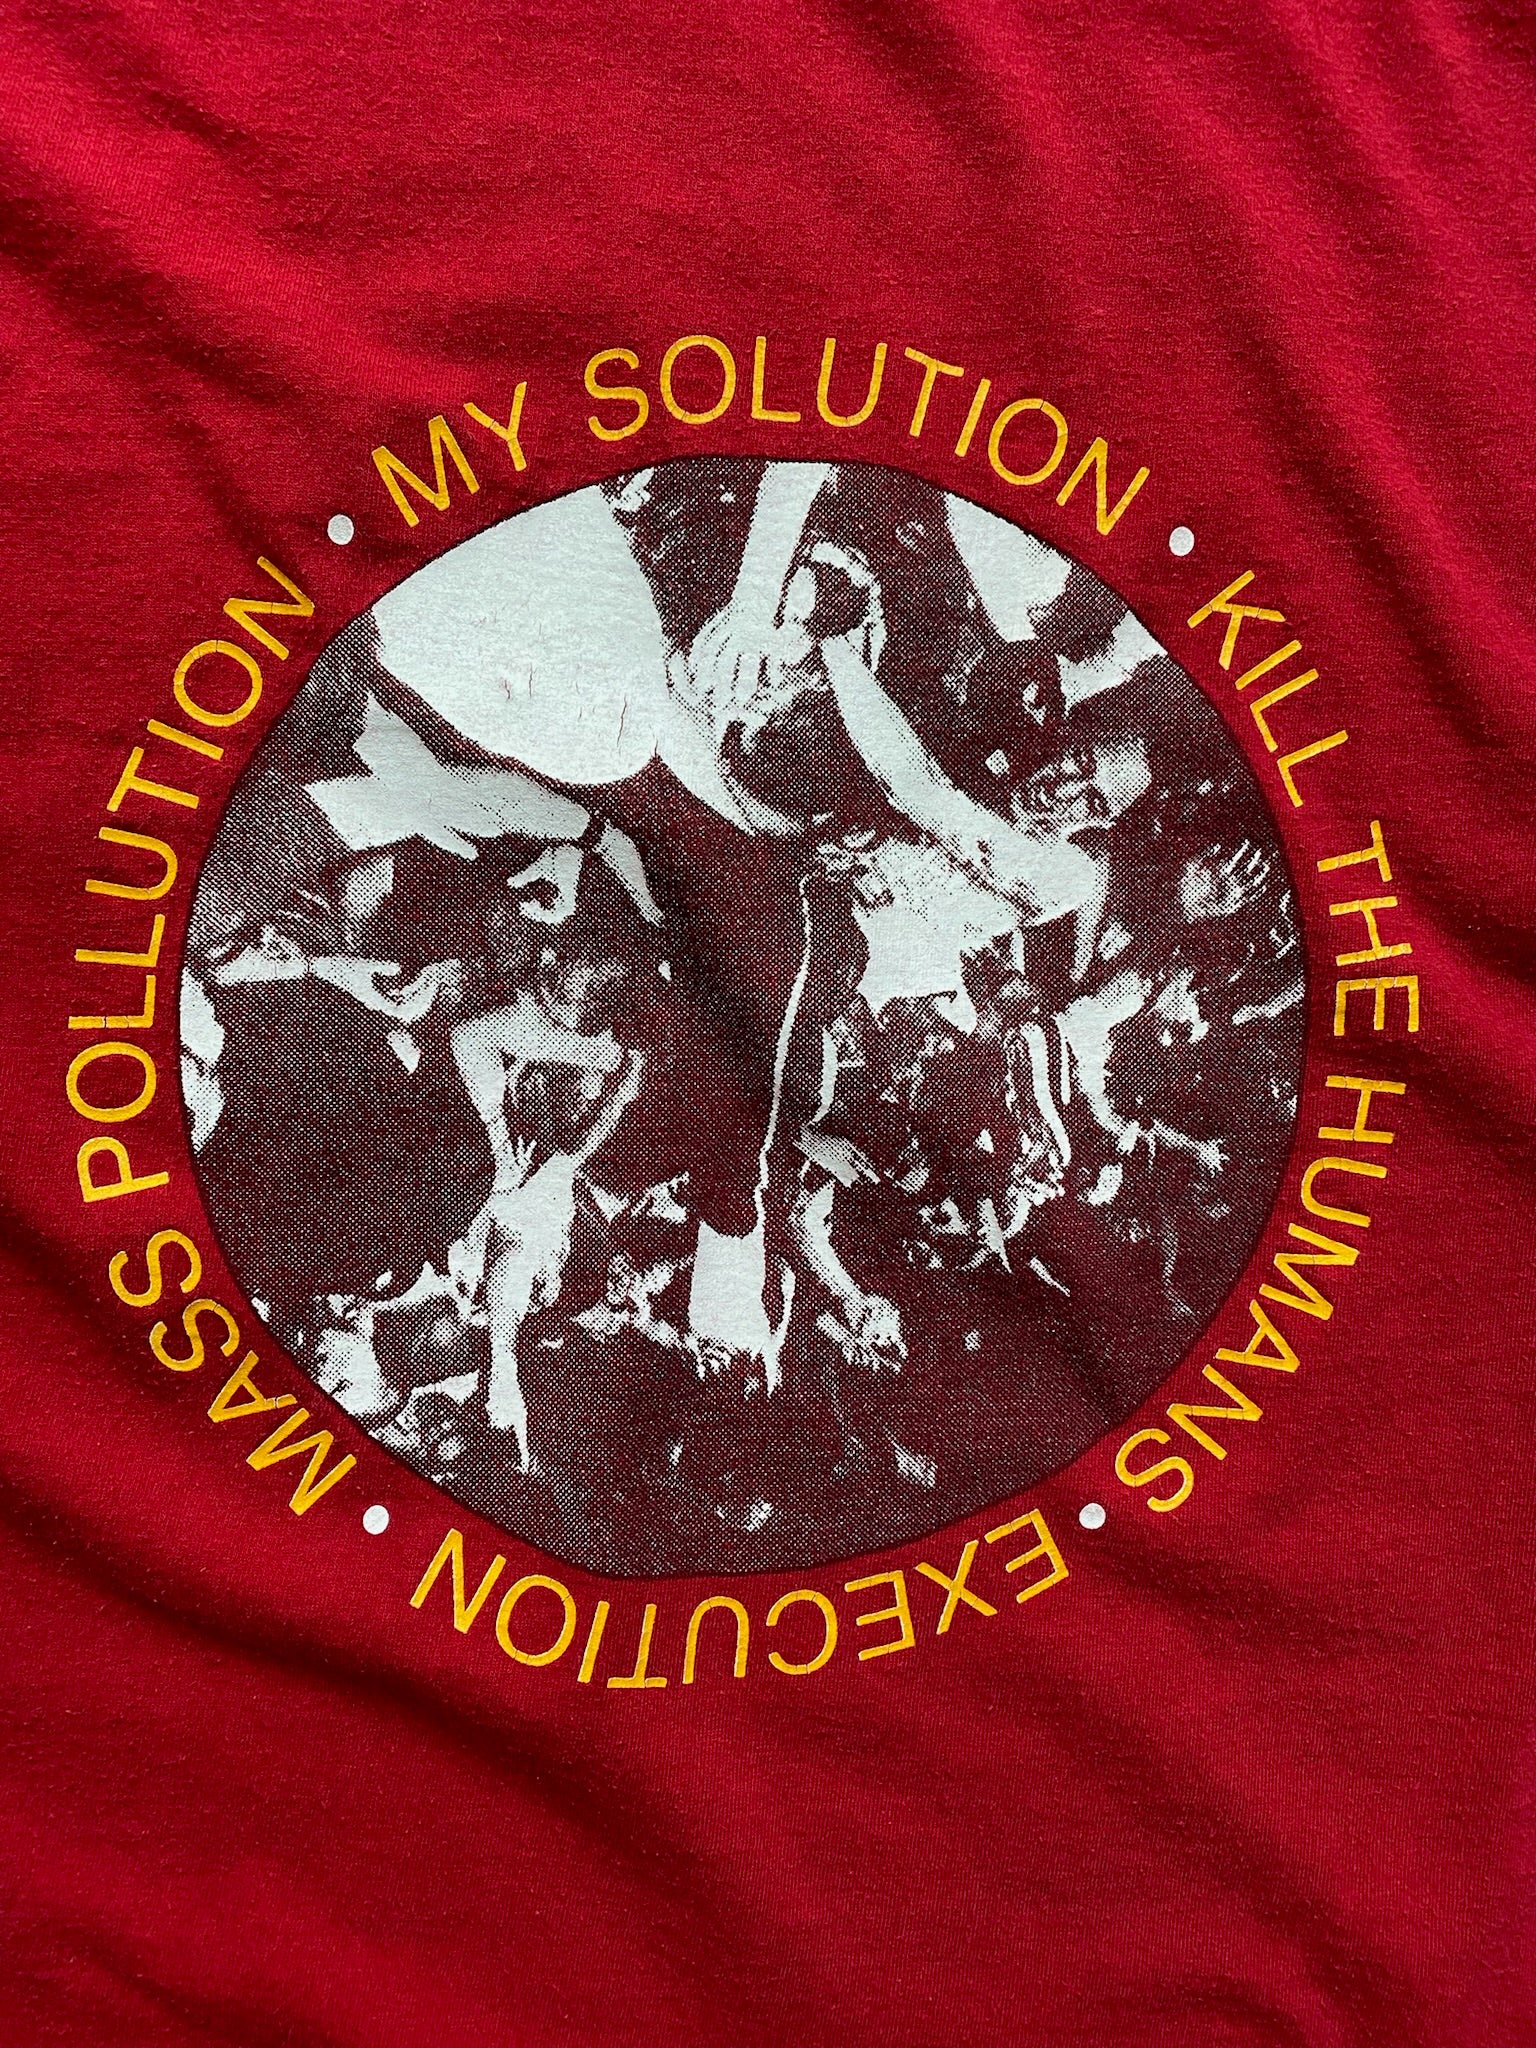 VISION OF DISORDER Tシャツ NYHC smcint.com